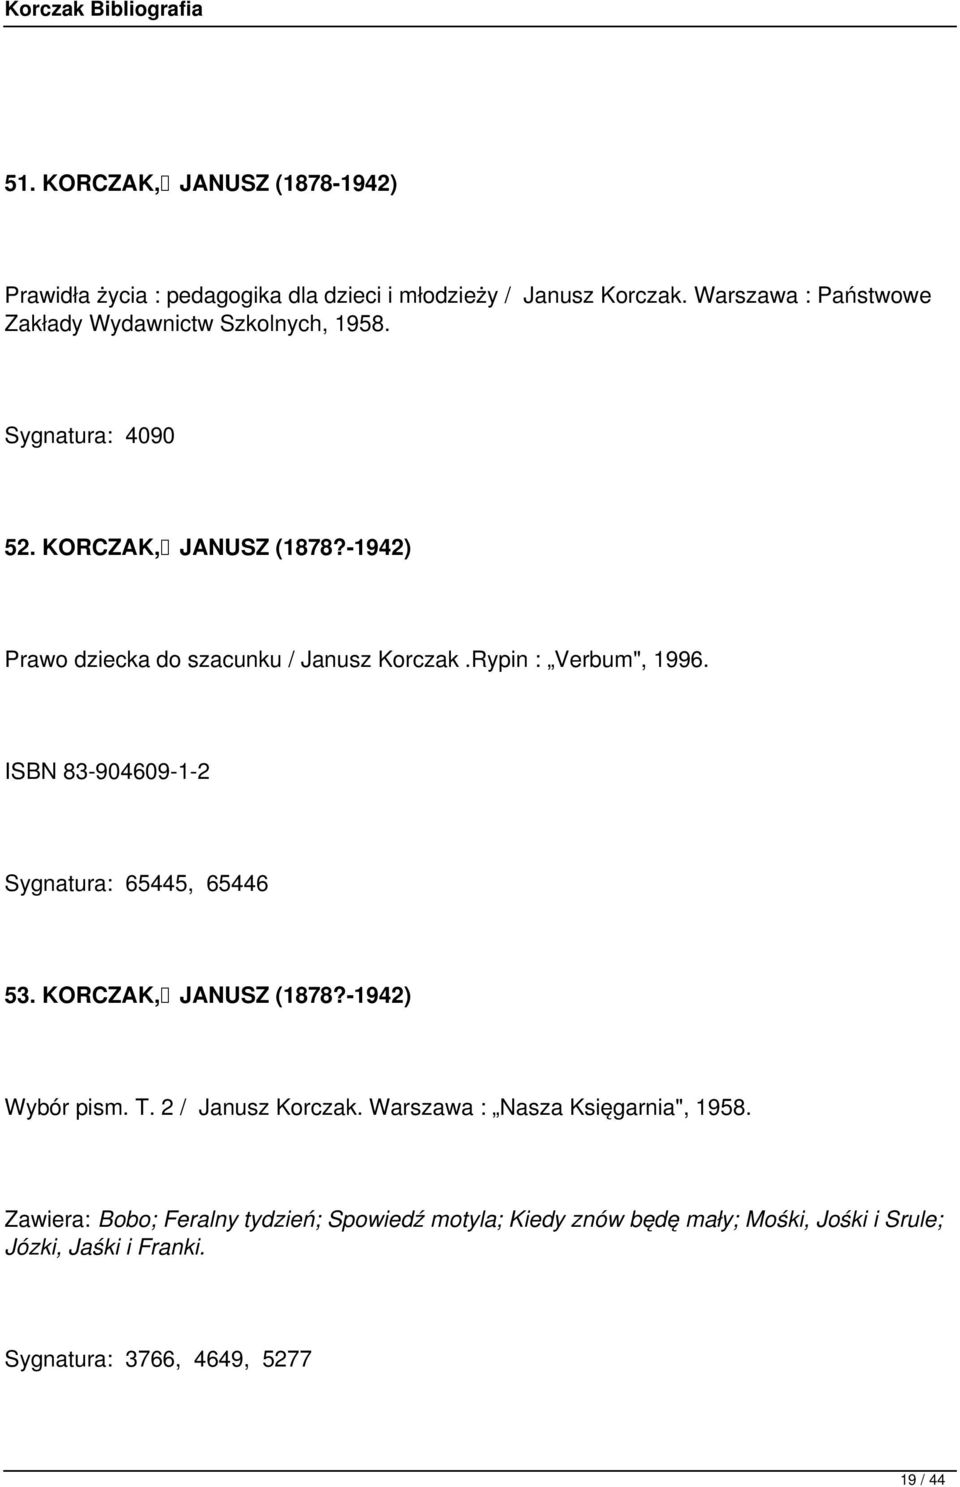 -1942) Prawo dziecka do szacunku / Janusz Korczak.Rypin : Verbum", 1996. ISBN 83-904609-1-2 Sygnatura: 65445, 65446 53. KORCZAK, JANUSZ (1878?